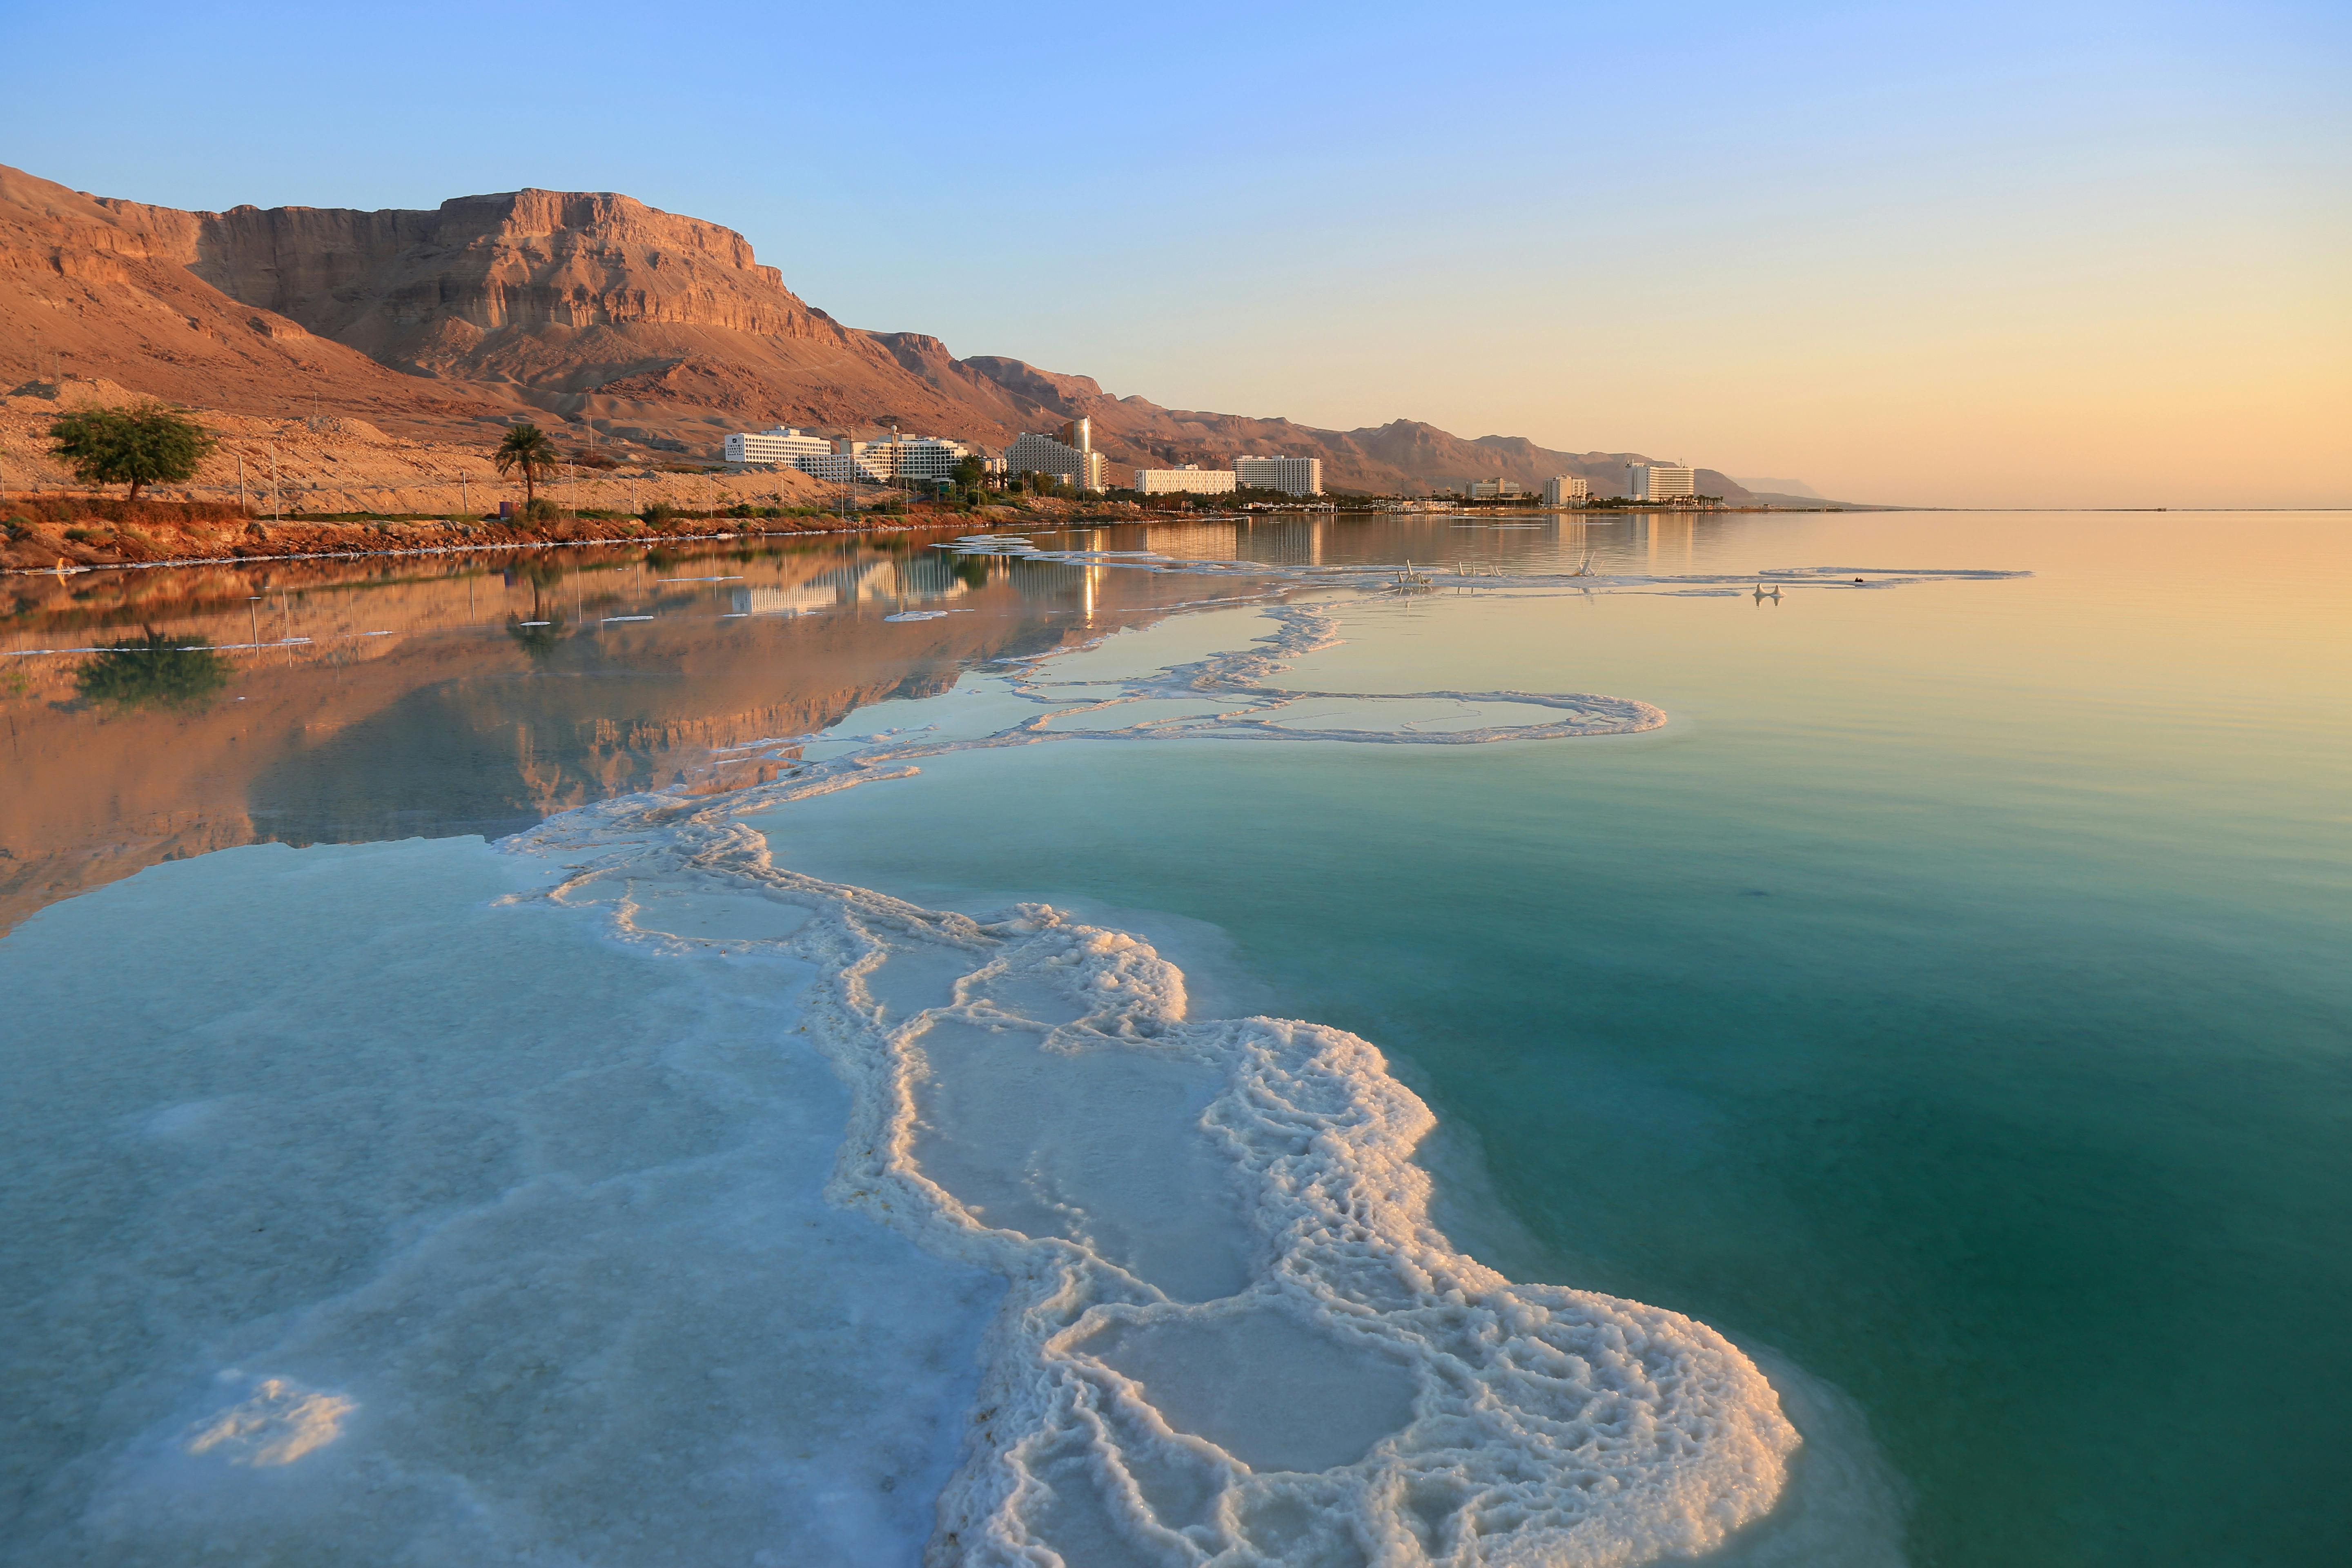 Full-day Masada and Dead Sea tour from Tel Aviv